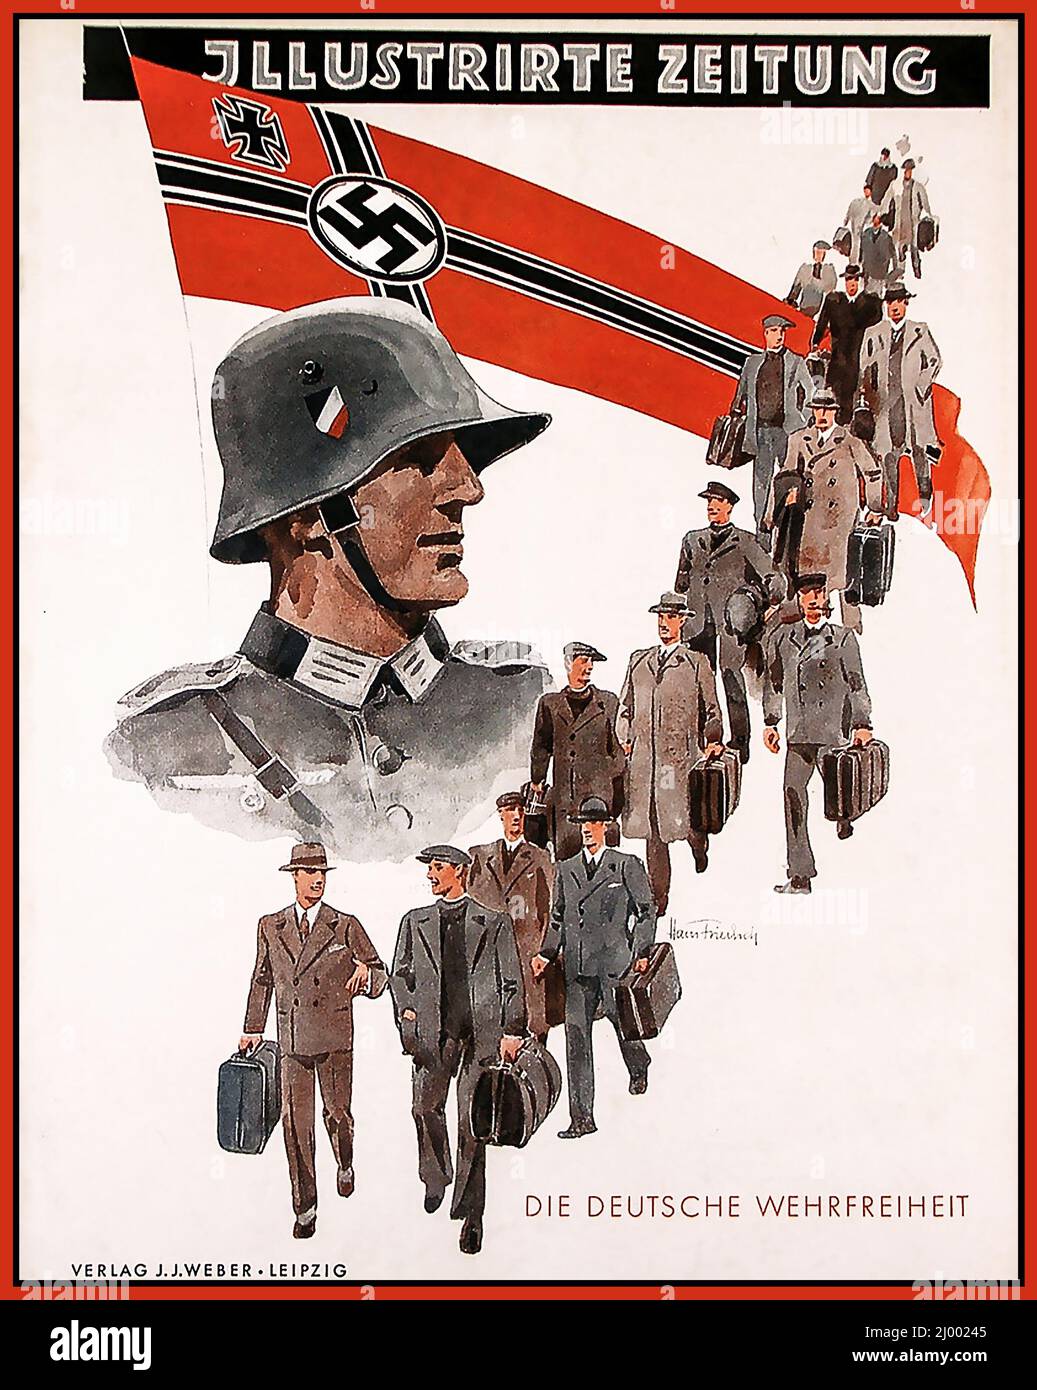 Nazi Germany Wehrmacht Army Propaganda WW2 Recruitment Recruiting Poster 'Die Deutsche Wehrfreiheit'  'The German military freedom' Illustrated Newspaper Lepzig Nazi Germany Second World War World War II Stock Photo